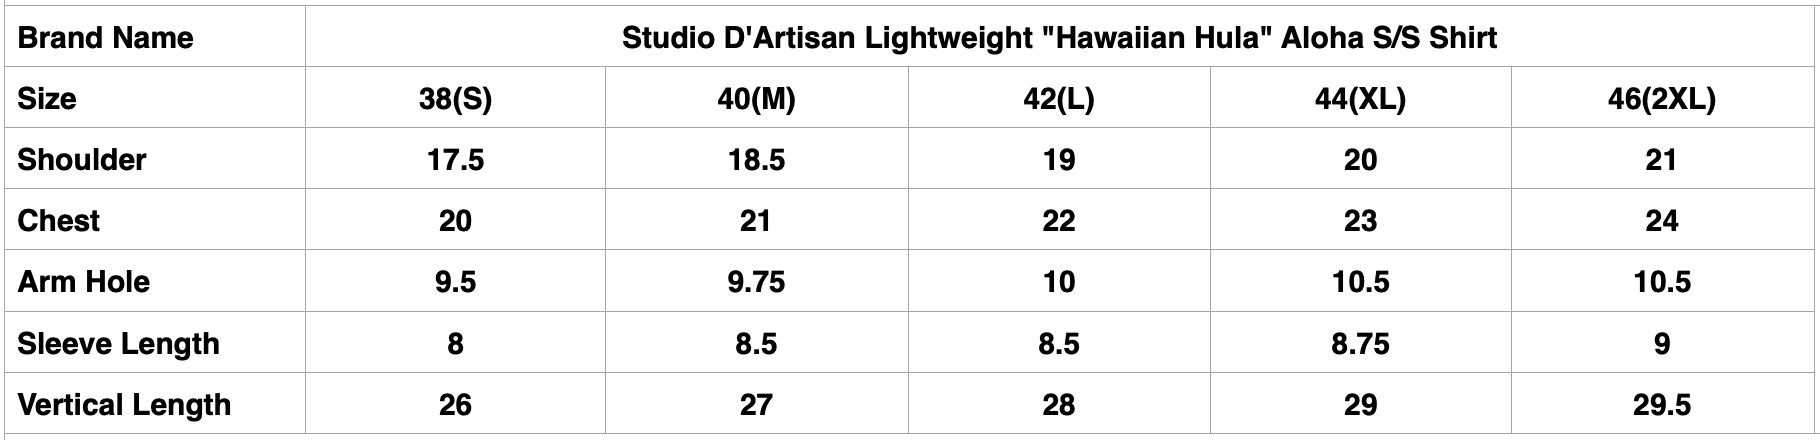 Studio D'Artisan Lightweight "Hawaiian Hula" Aloha S/S Shirt